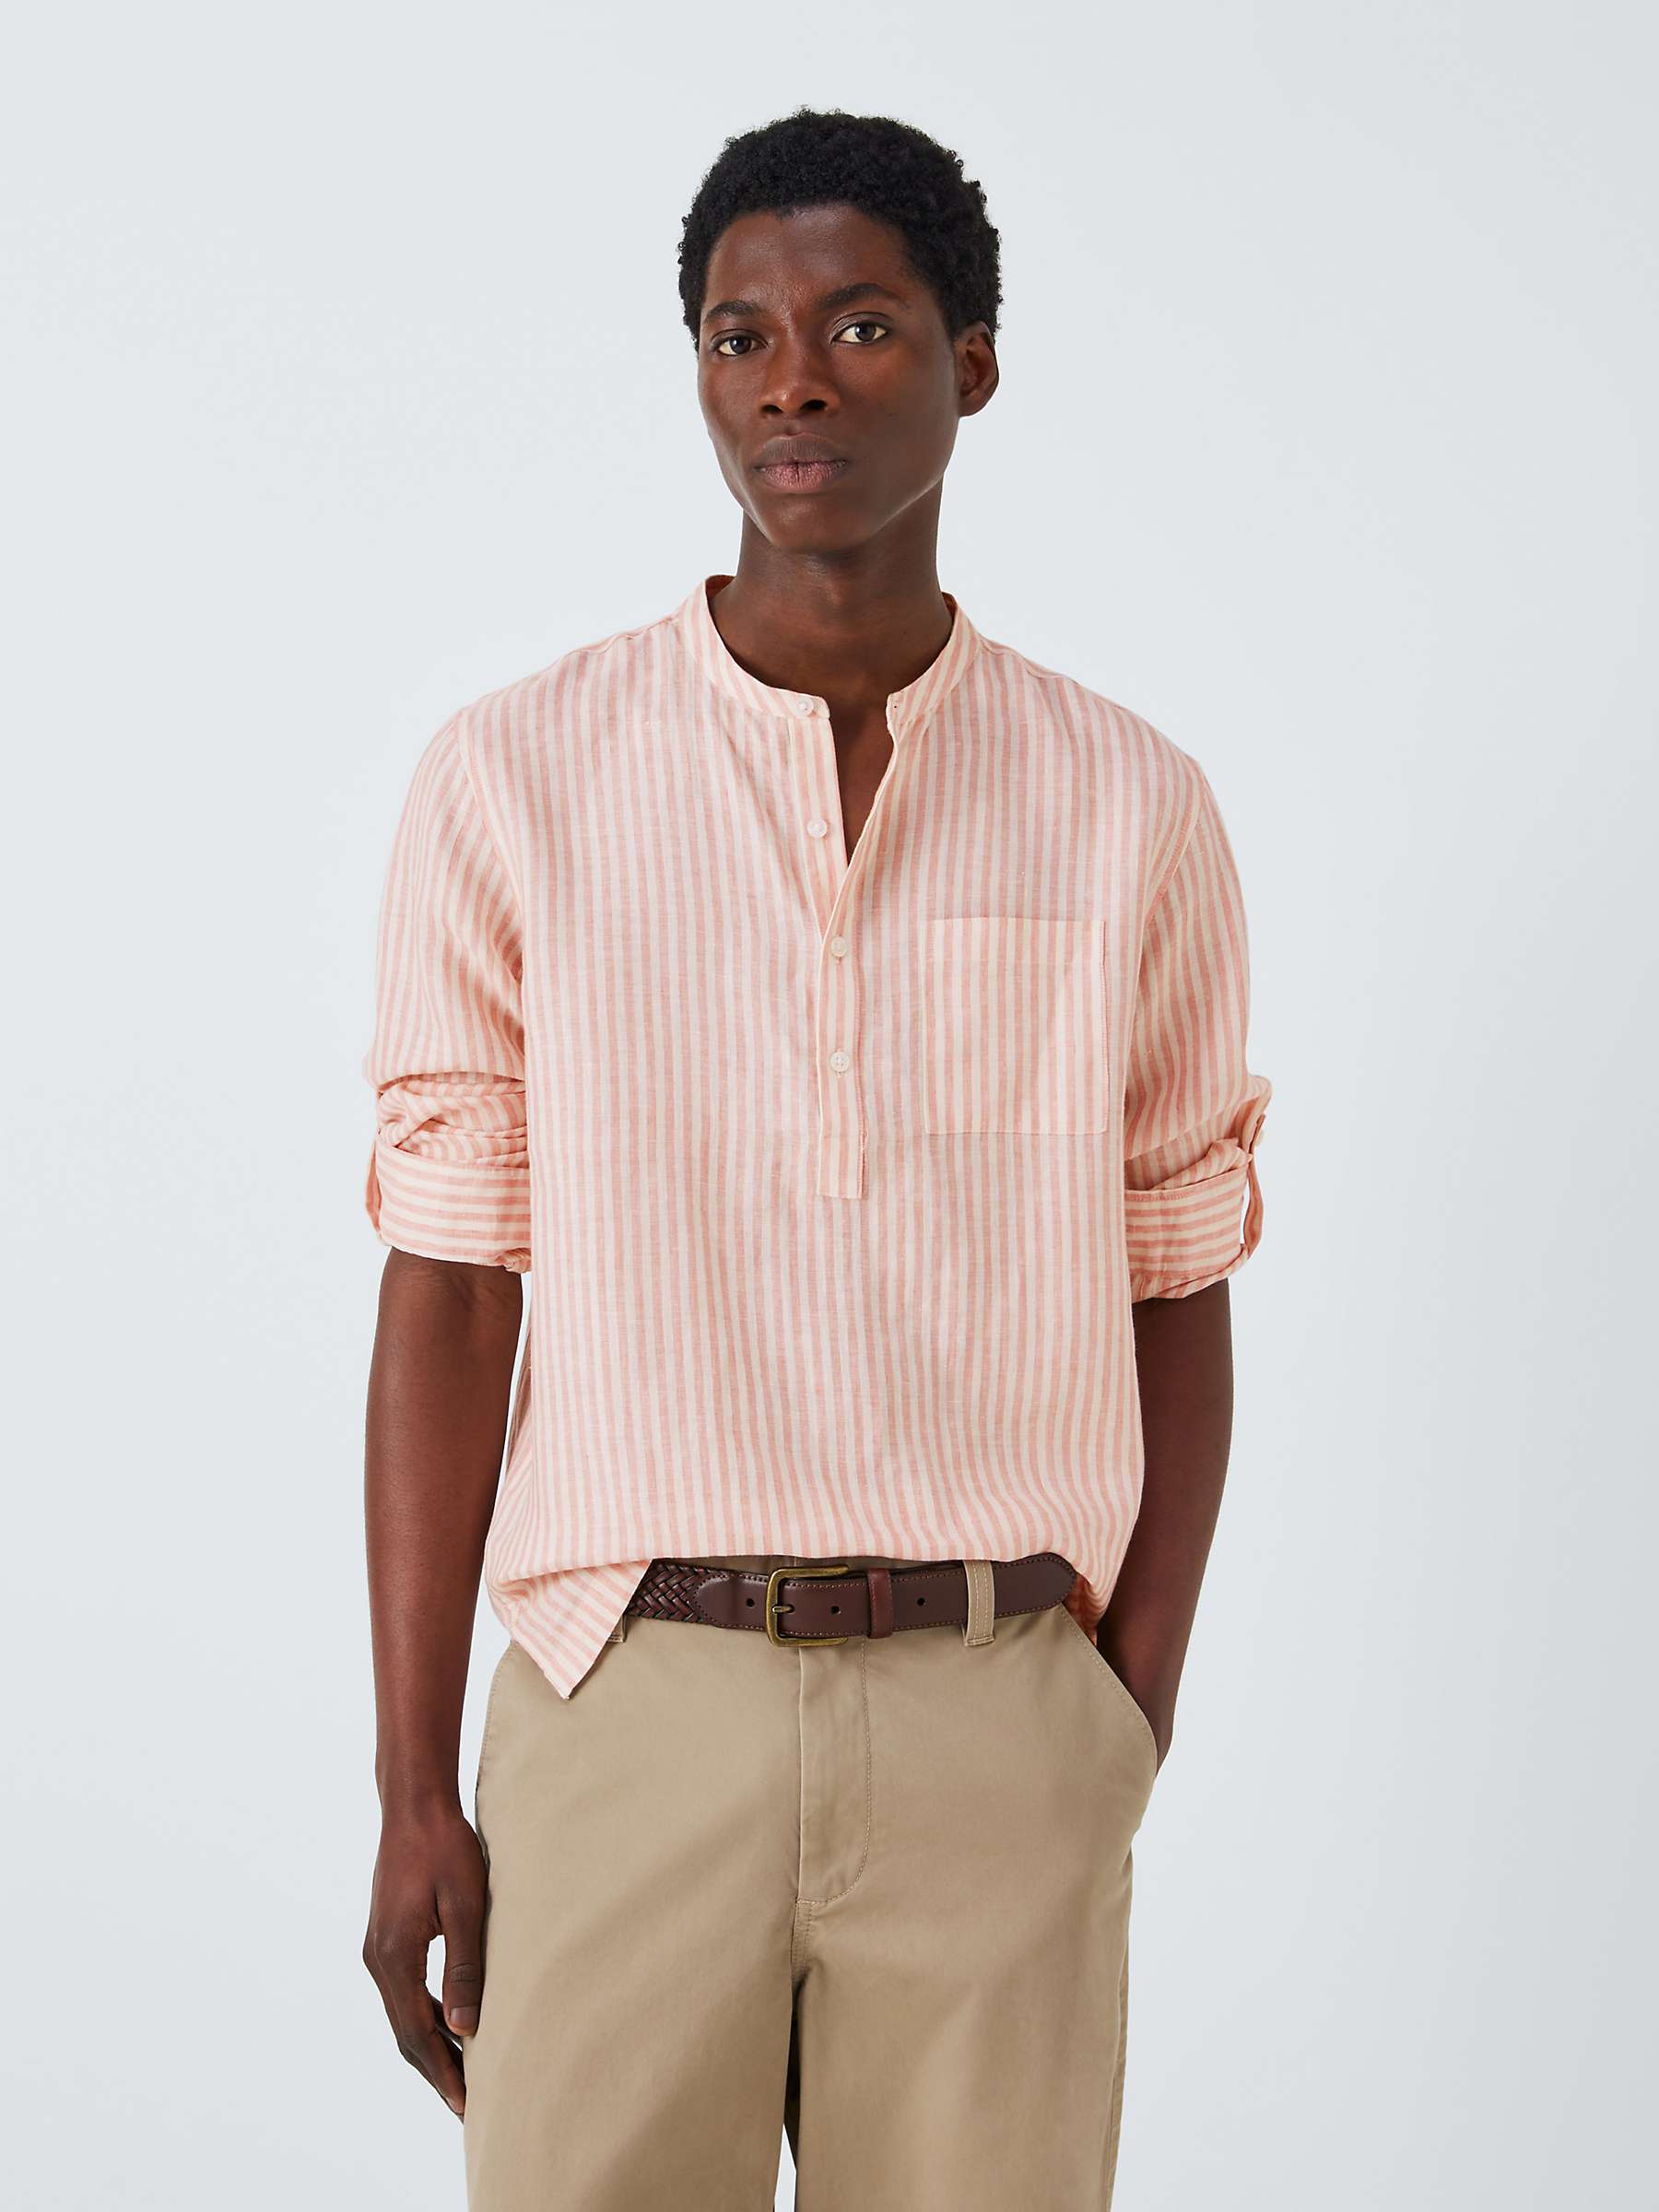 Buy John Lewis Linen Striped Grandad Collar Beach Shirt Online at johnlewis.com